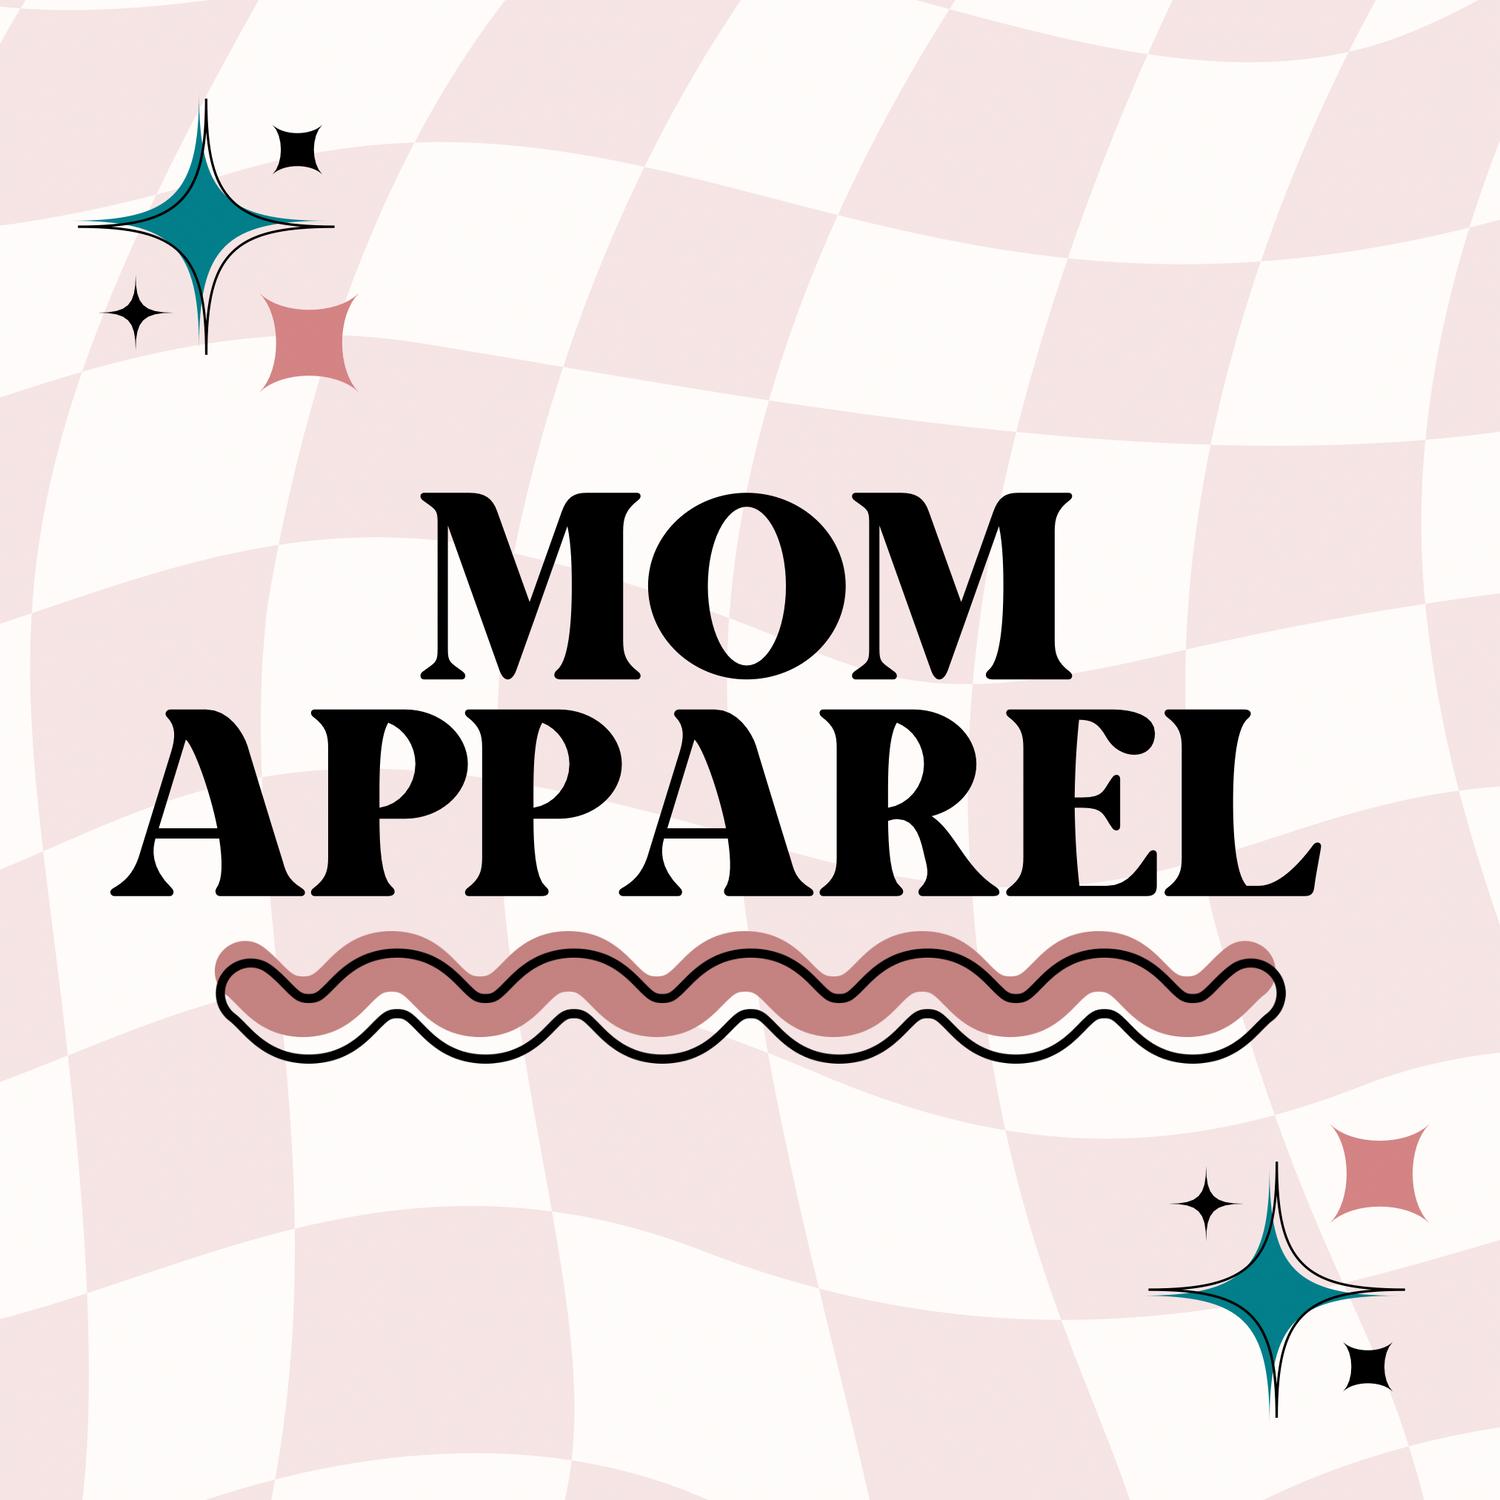 Mom Apparel